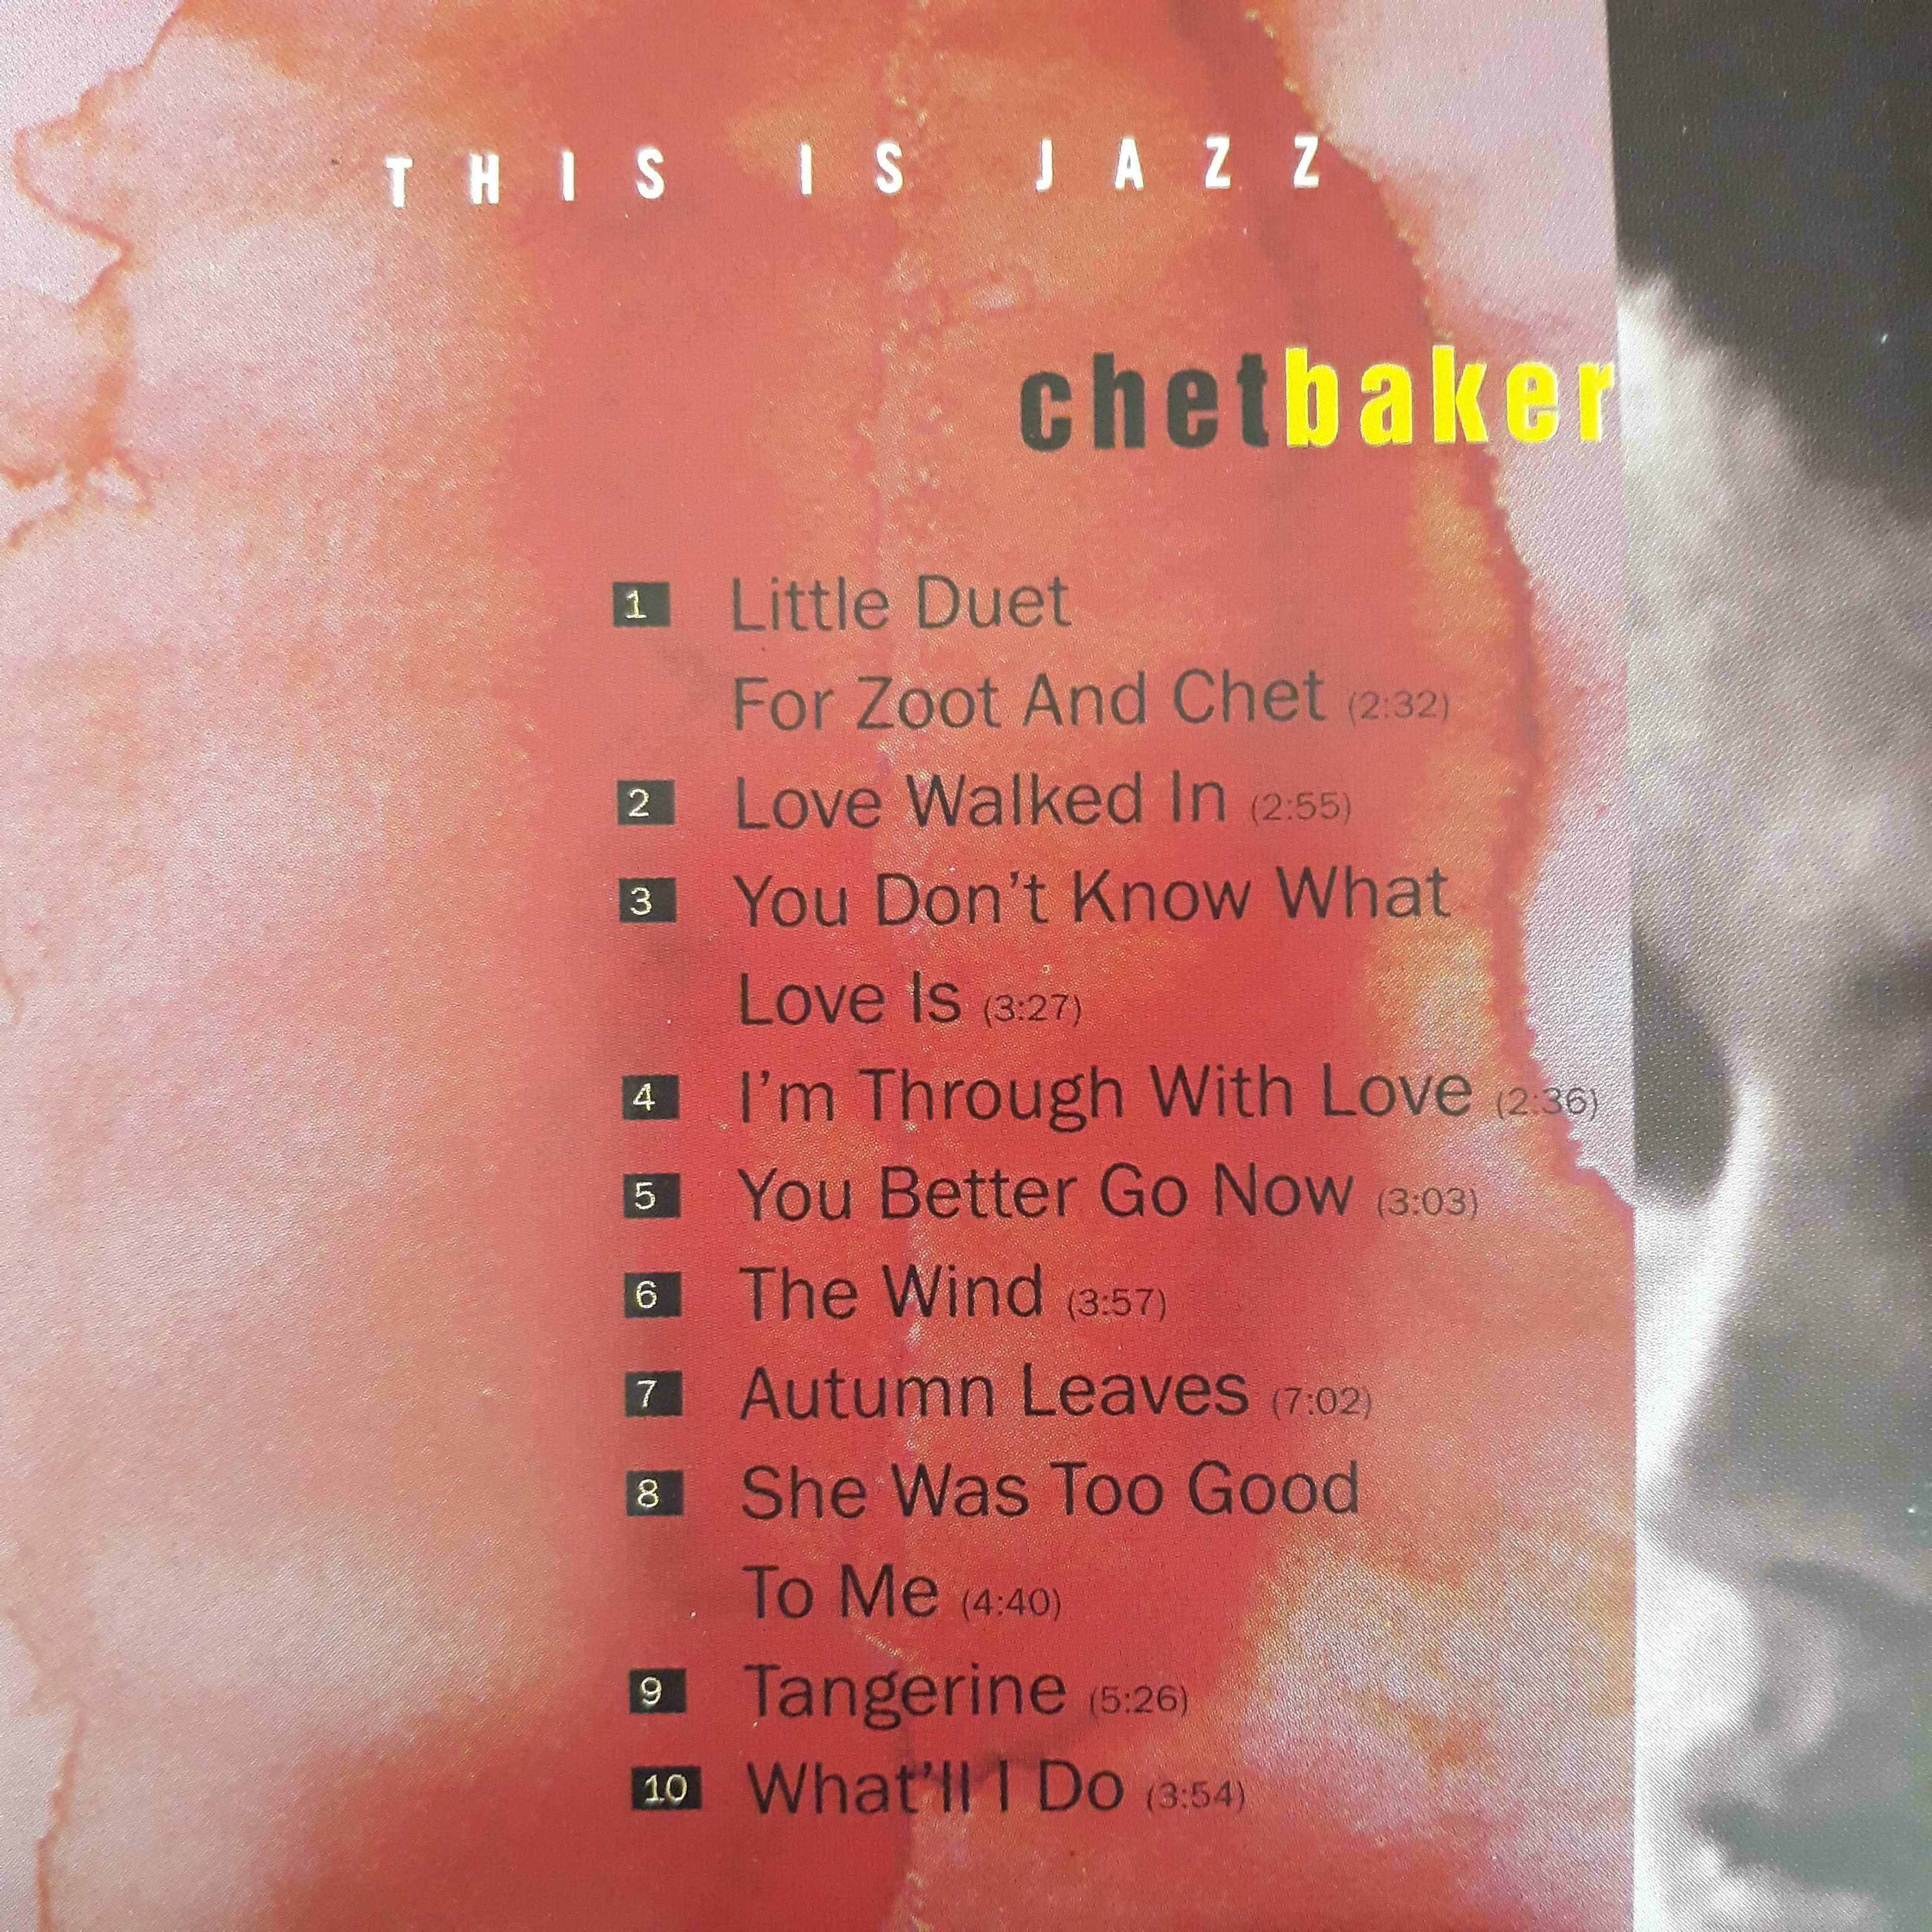 Chet Baker, cd, This is jazz, Sony Music, 1996